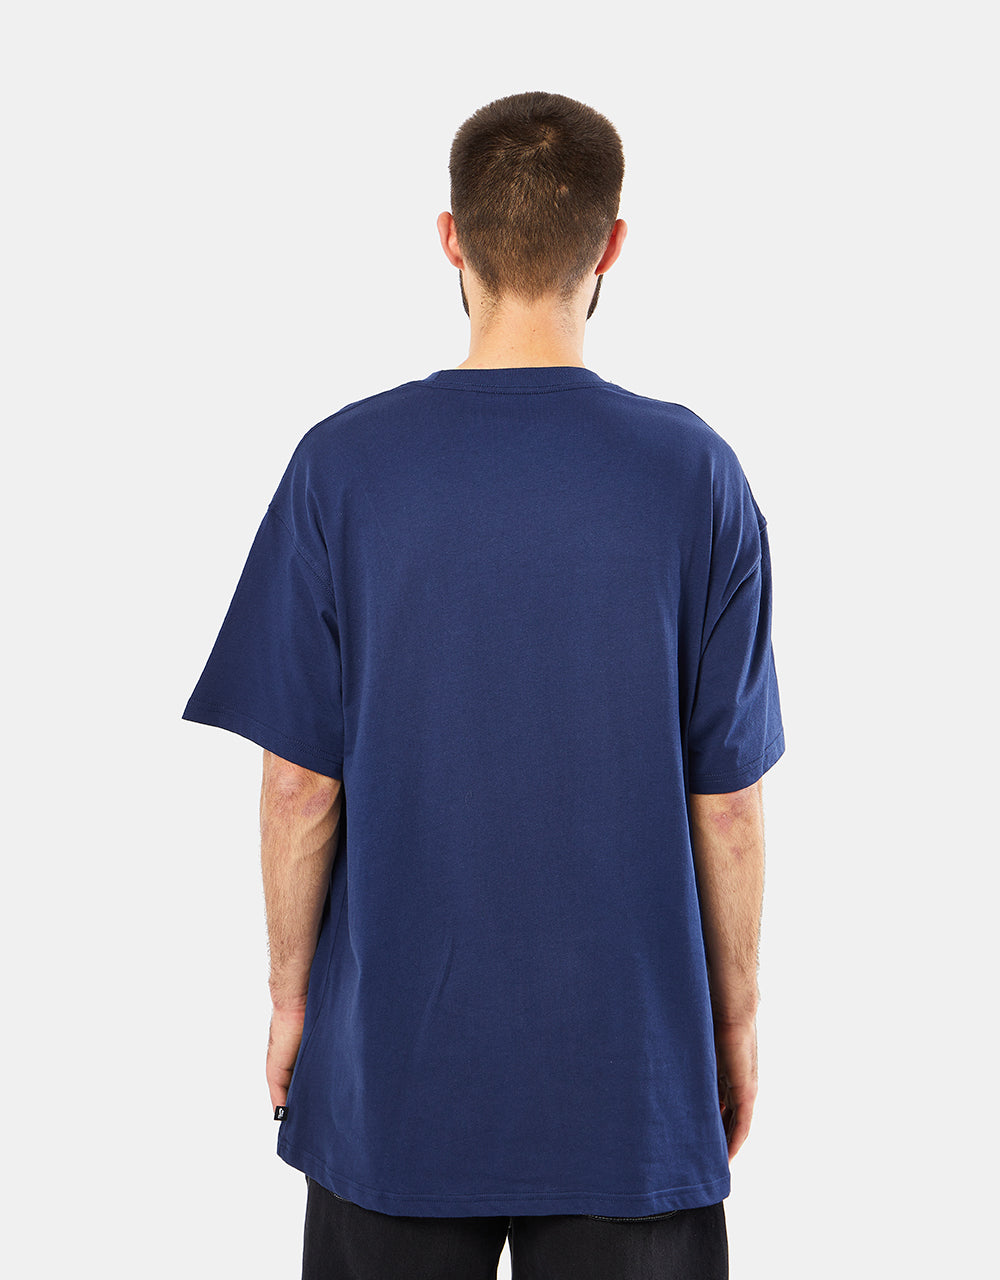 Nike SB Daisy T-Shirt - Midnight Navy